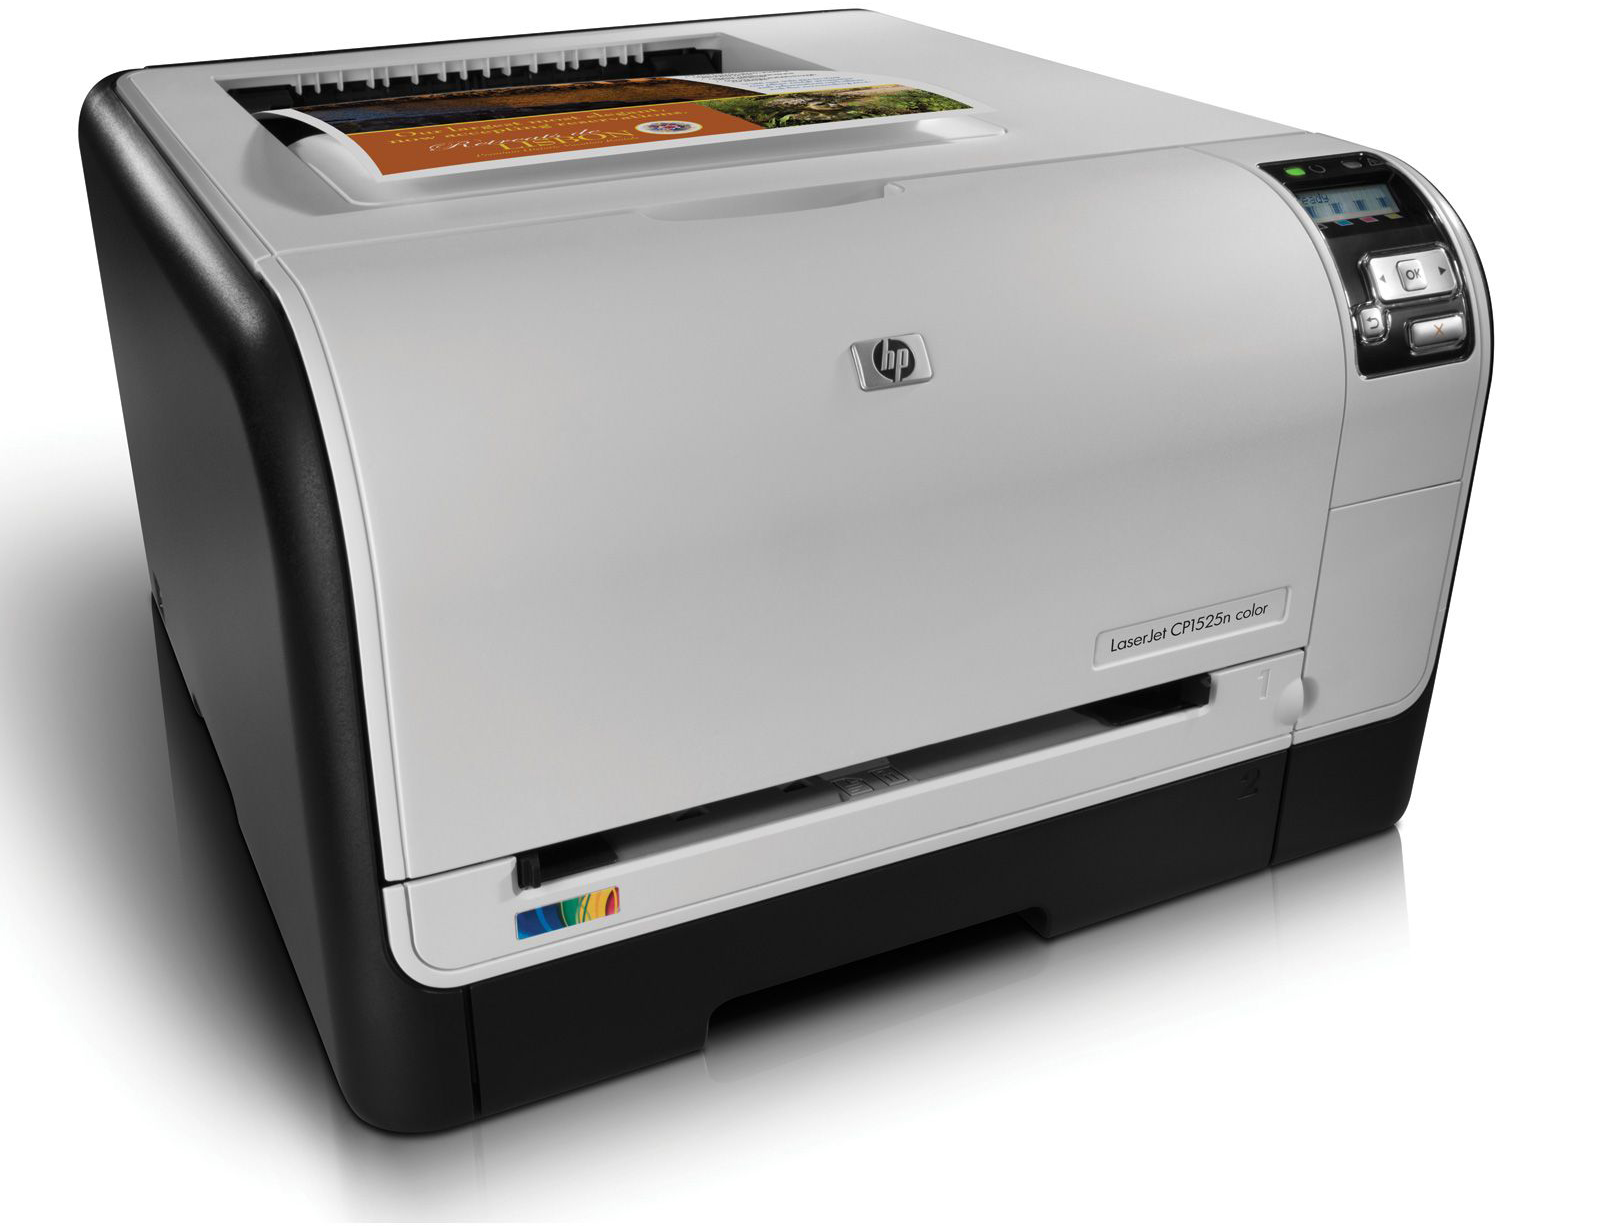 Download Driver Printer Hp Laserjet P1102 For Windows 10